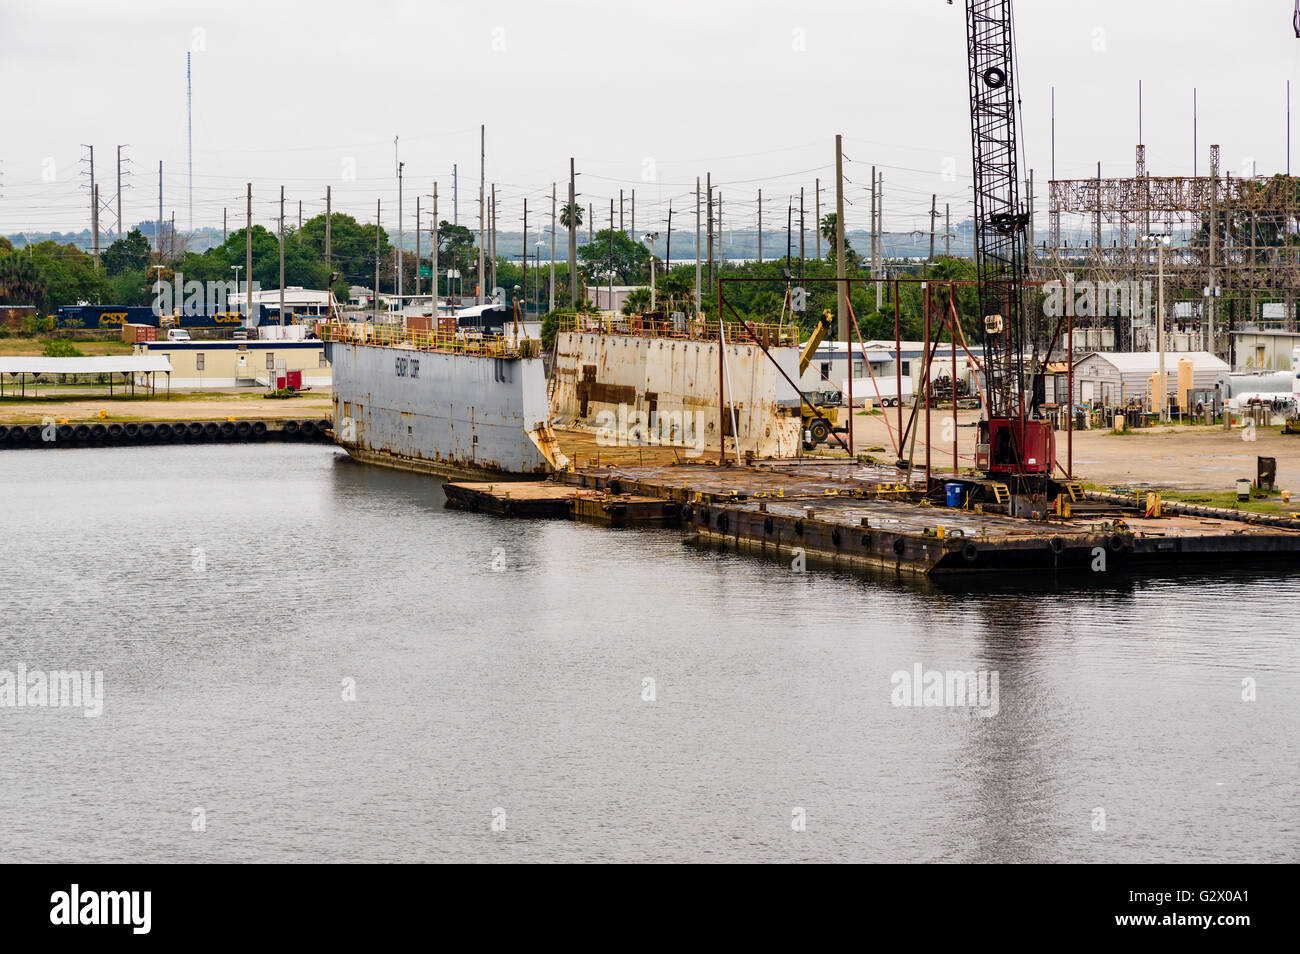 Repair dry dock with crane docked at Port of Tampa Bay.  Tampa Bay, Florida Stock Photo